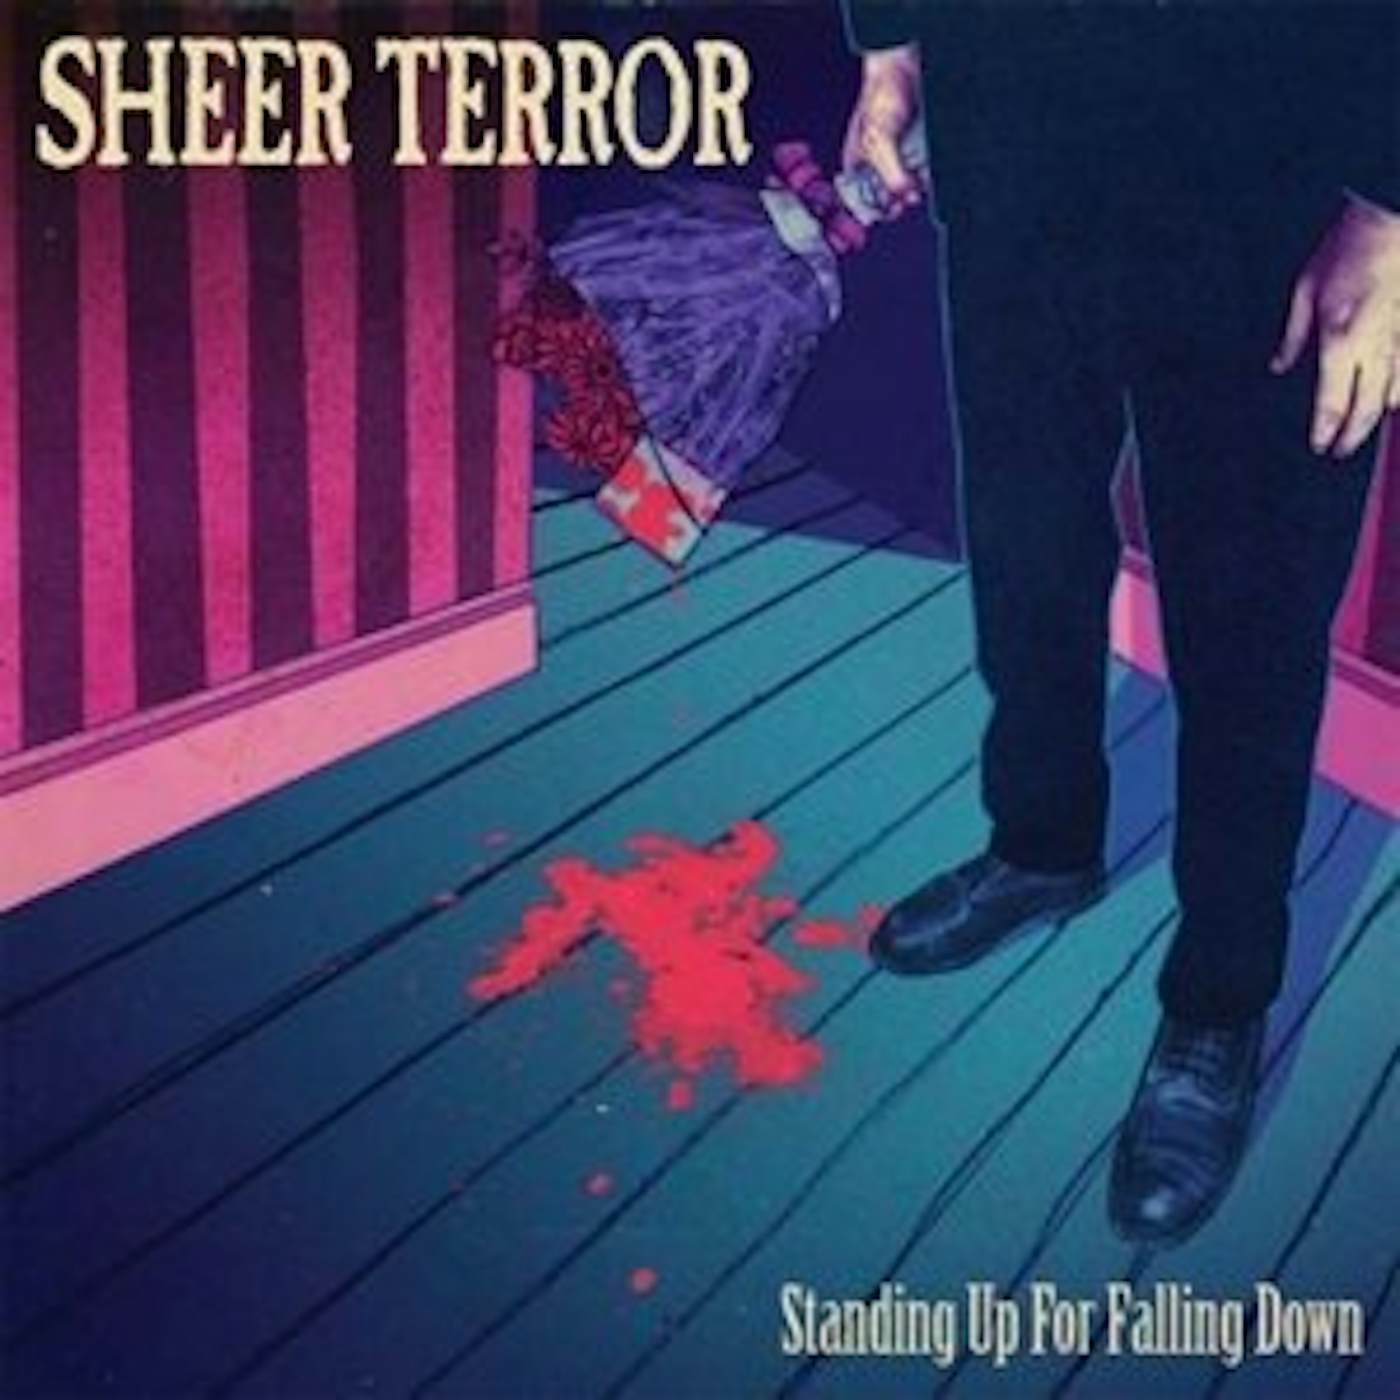 Sheer Terror STANDING UP FOR FALLING DOWN Vinyl Record